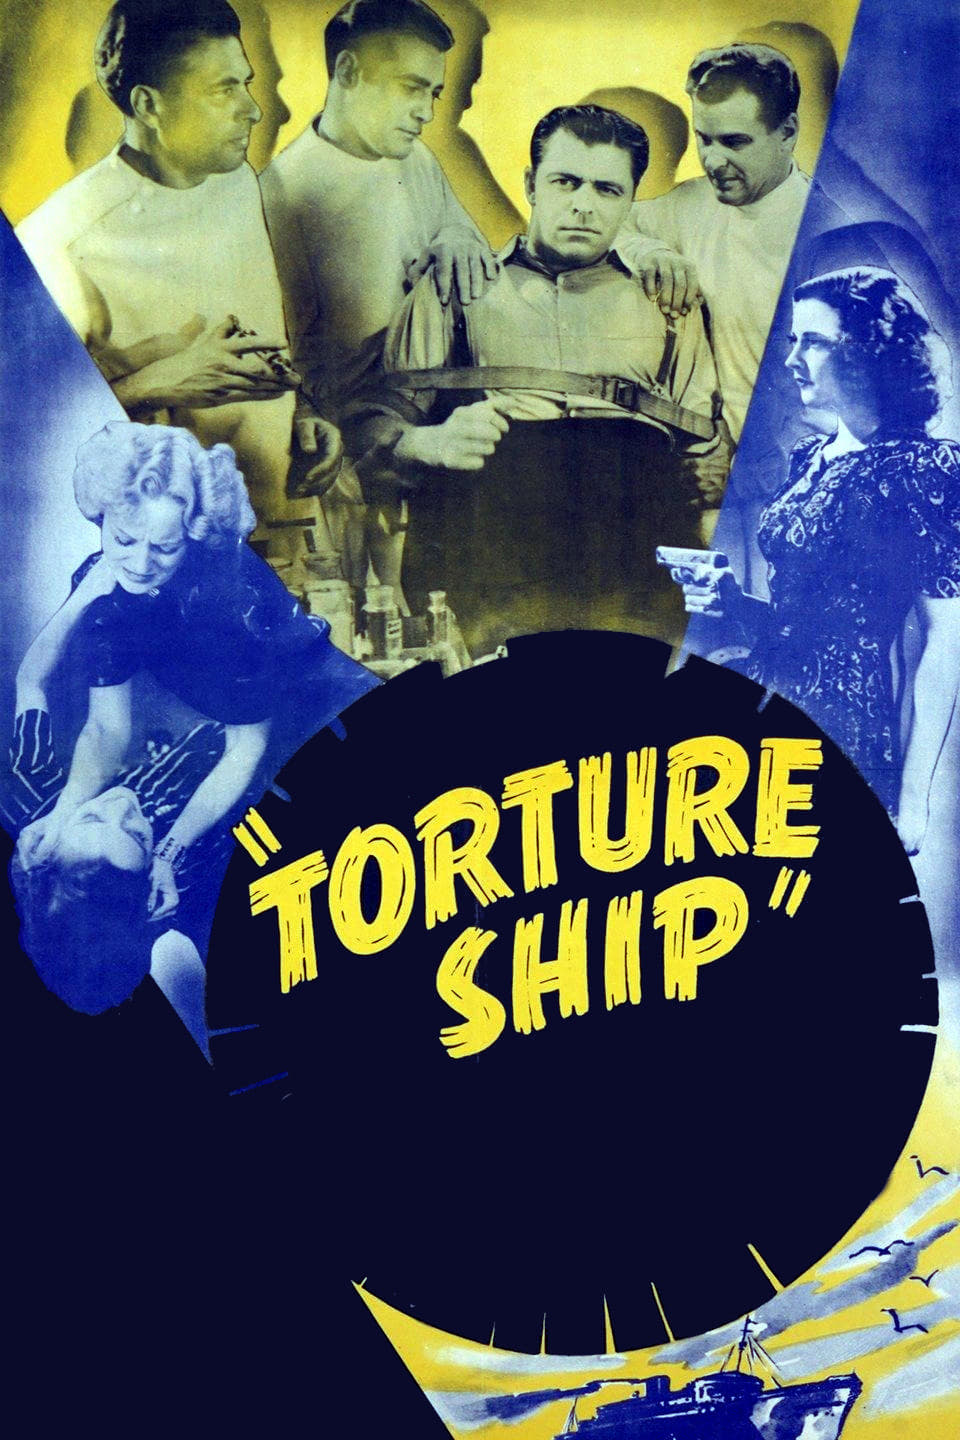 Torture Ship (1939)